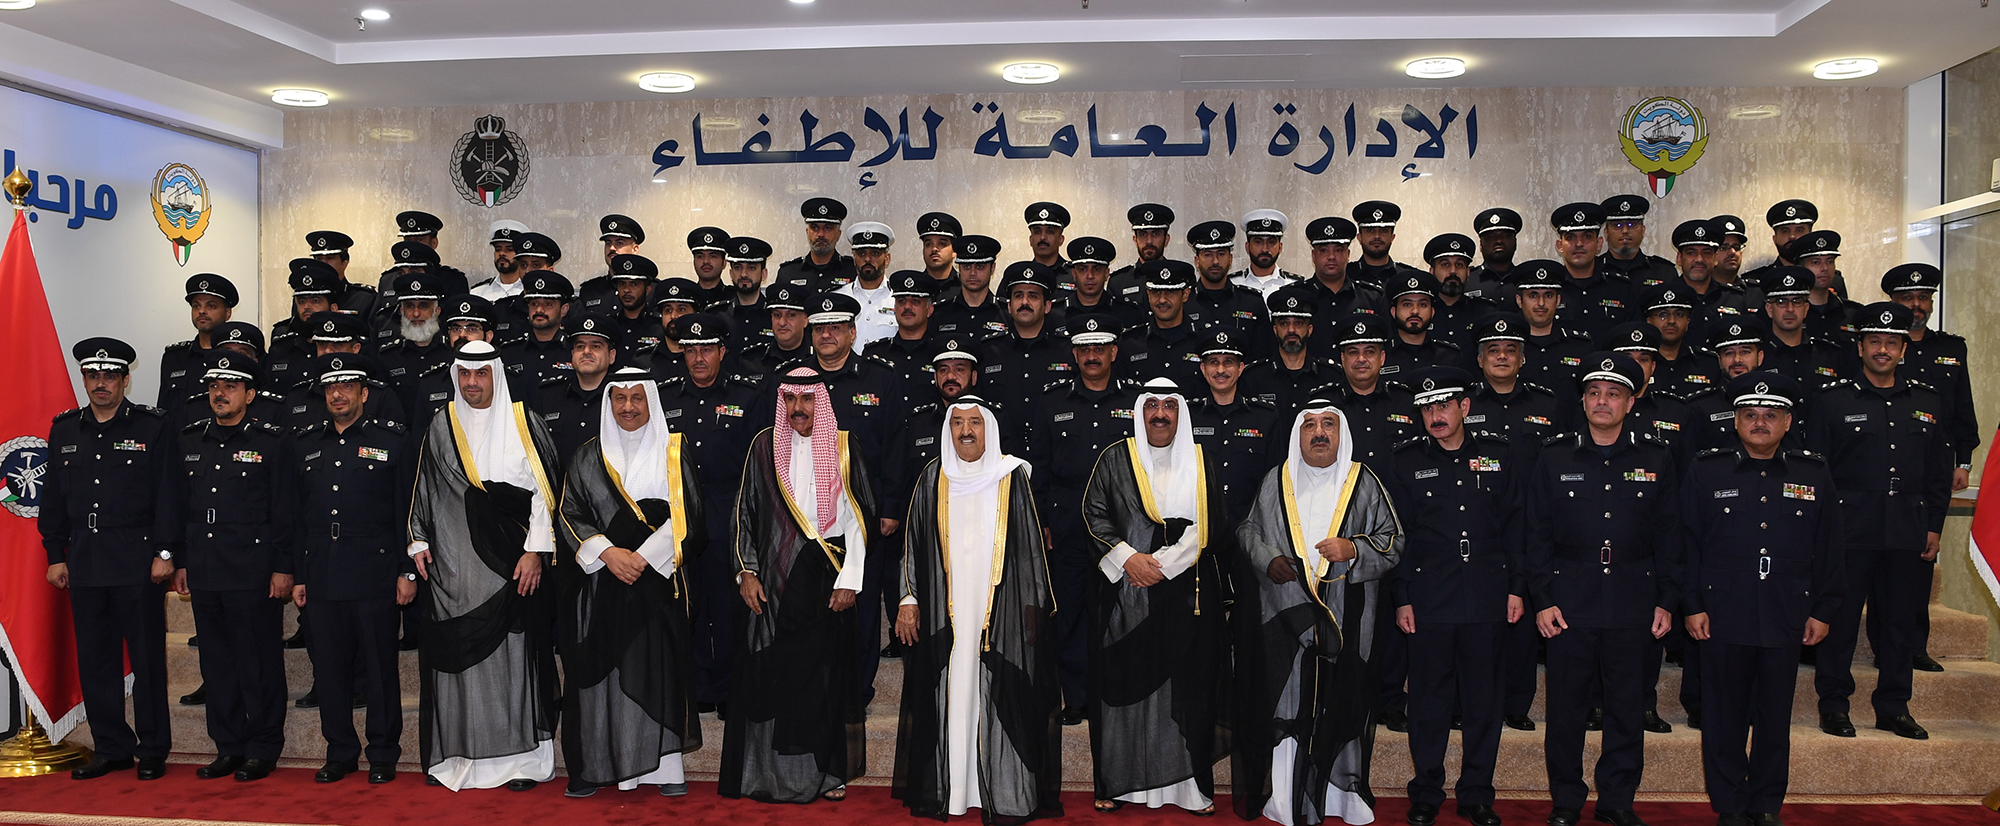 His Highness the Amir Sheikh Sabah Al-Ahmad Al-Jaber Al-Sabah visits the Headquarters of Kuwait Fire Service Directorate (KFSD)